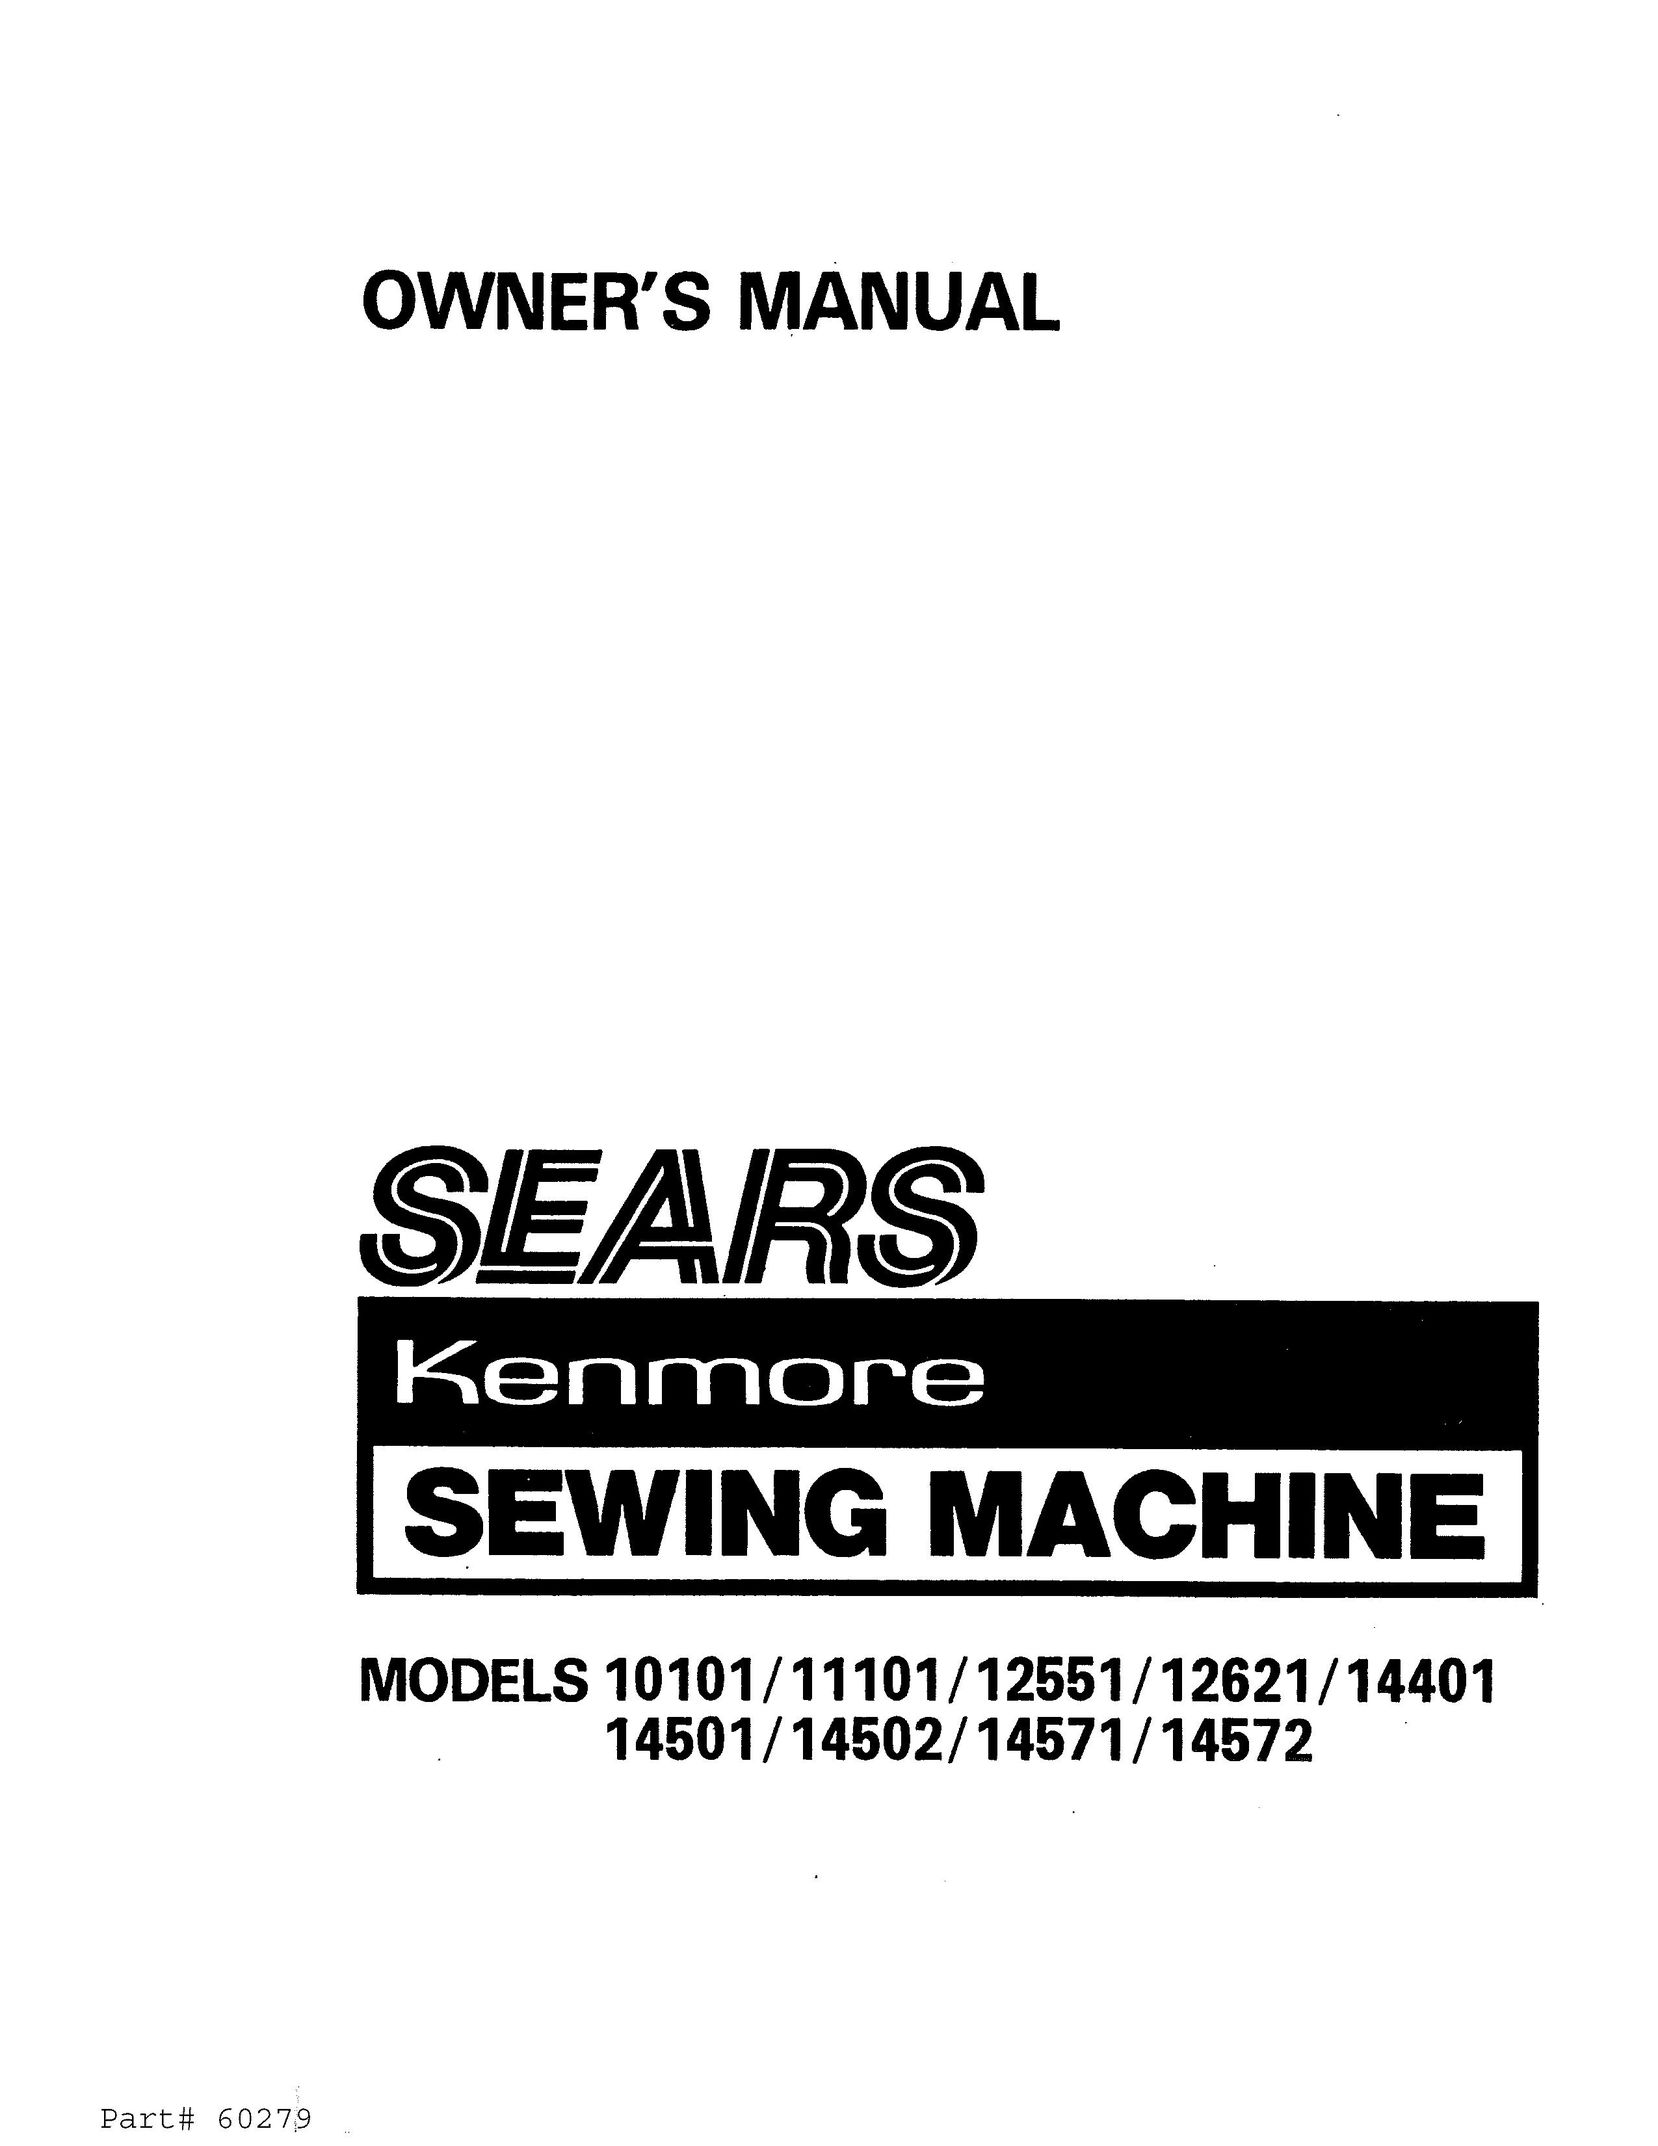 Kenmore 14571 Sewing Machine User Manual